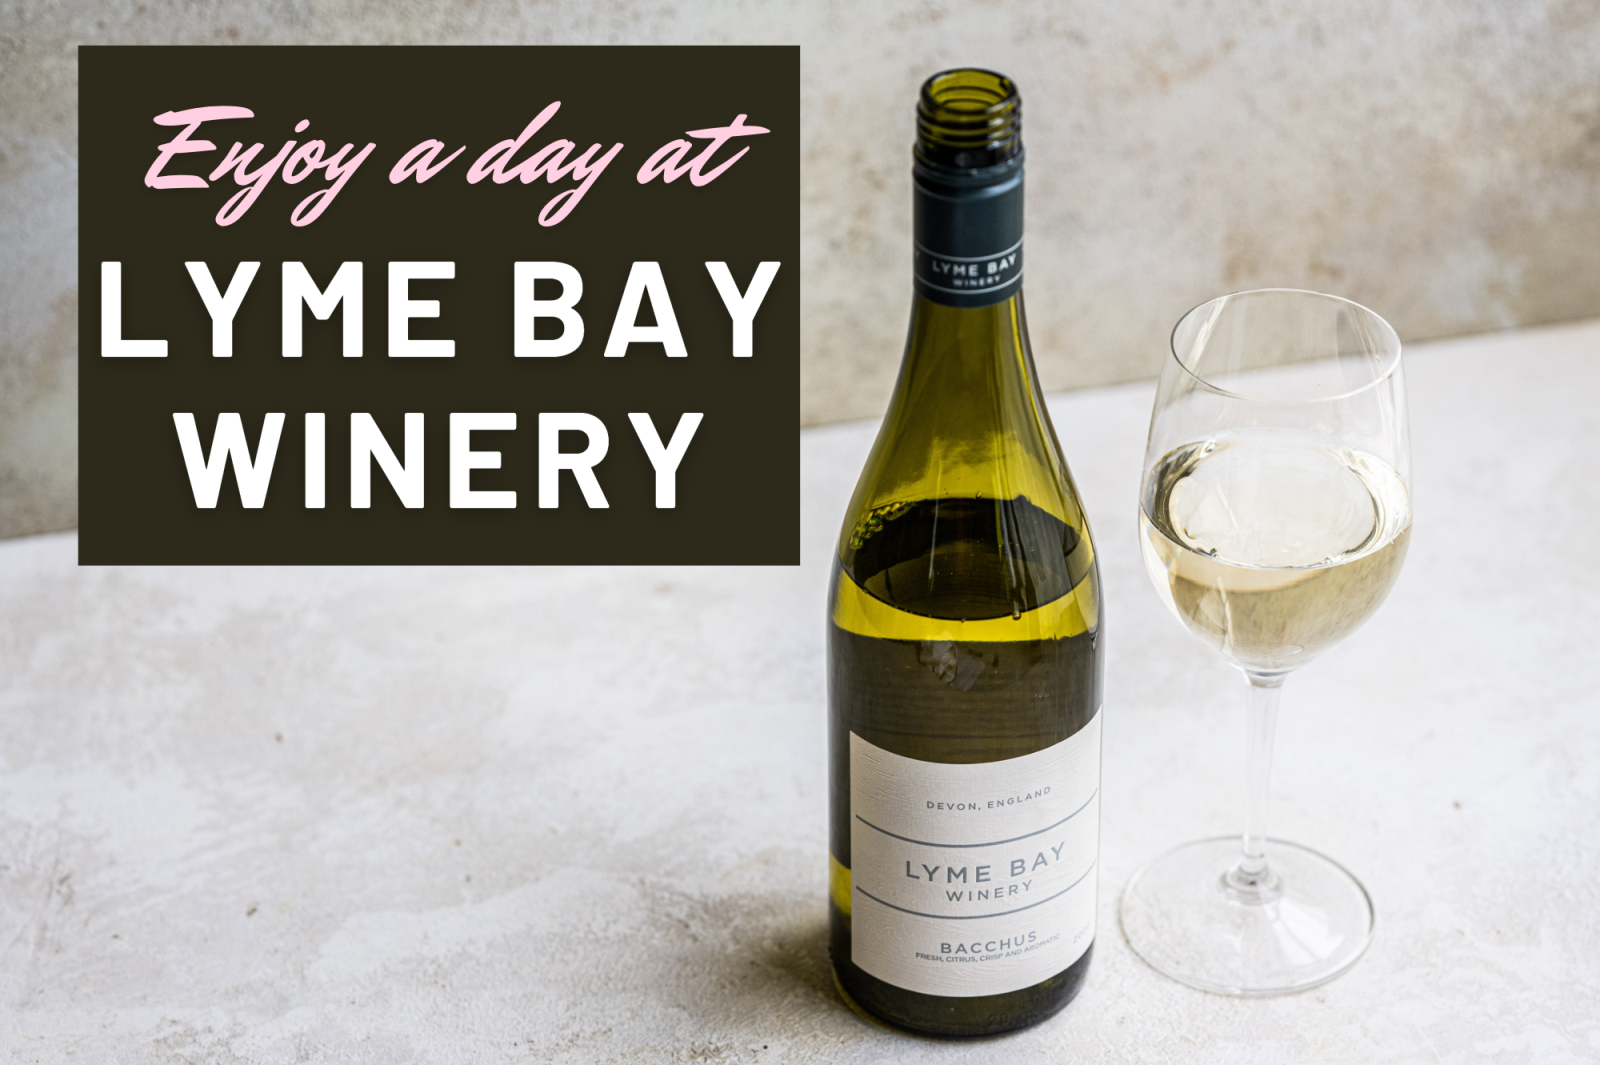 Enjoy a Day at Lyne Bay Winery